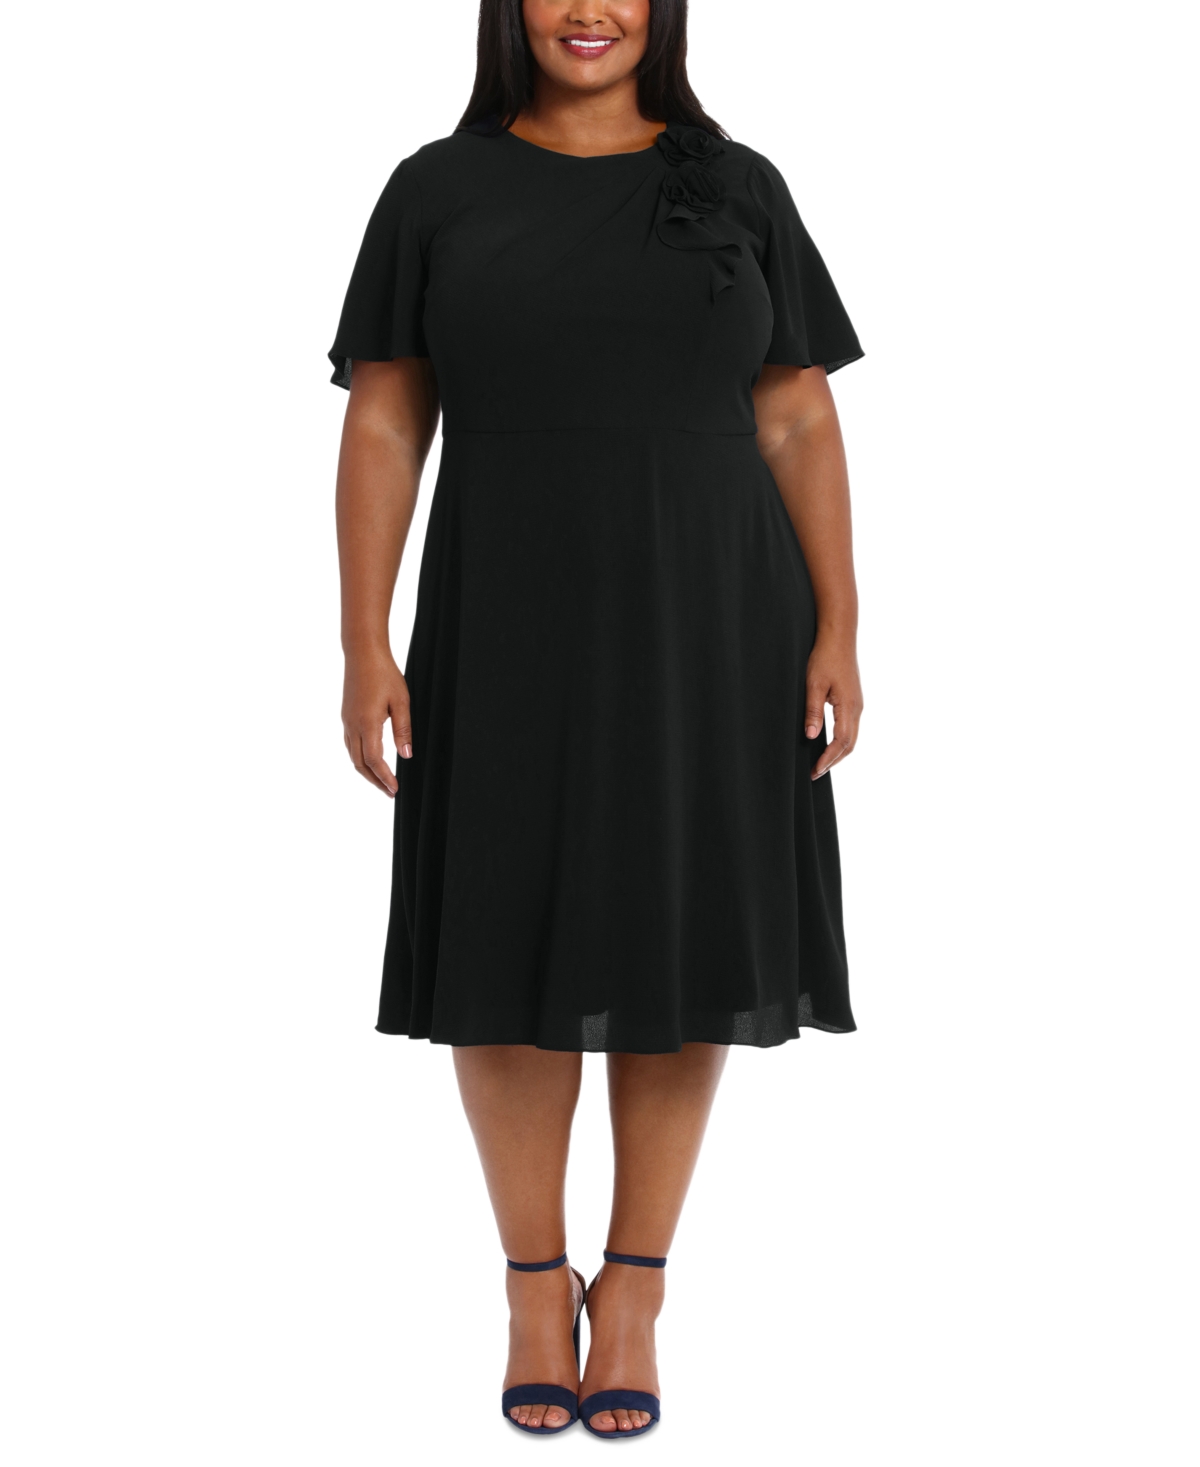 Plus Size Rosette Fit & Flare Dress - Black